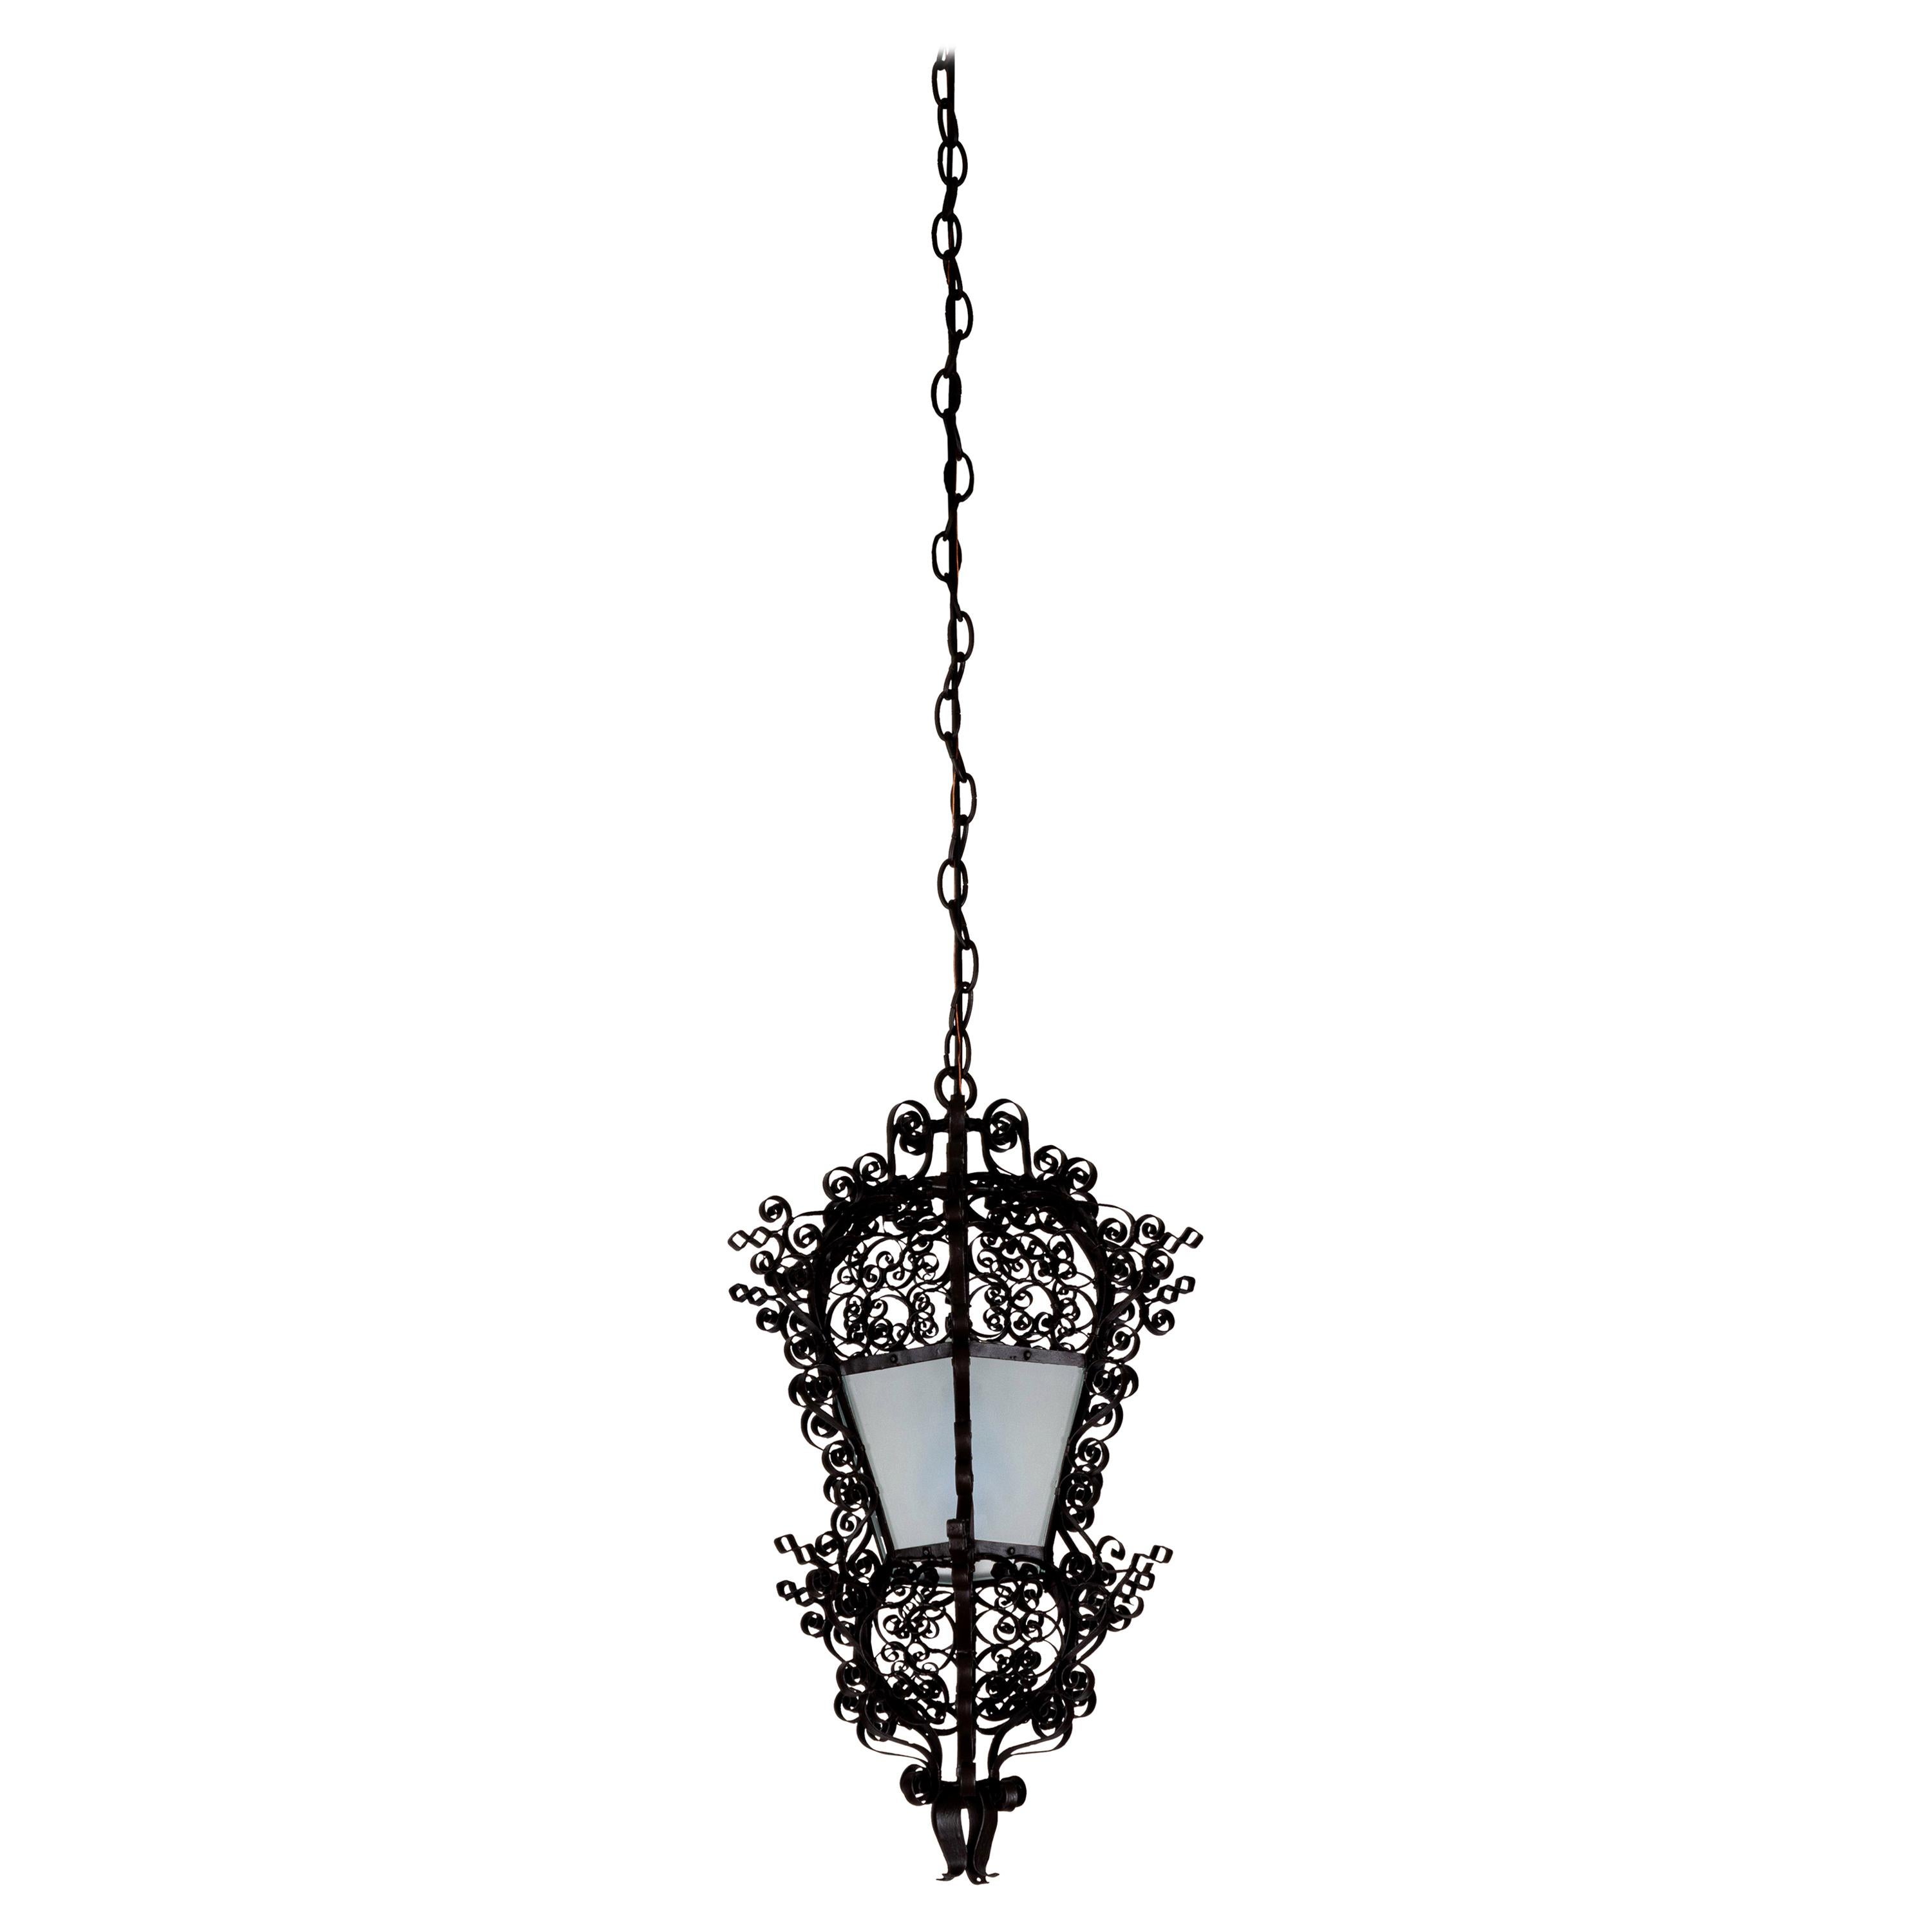 Antique French Iron Hanging Lantern Pendant Light